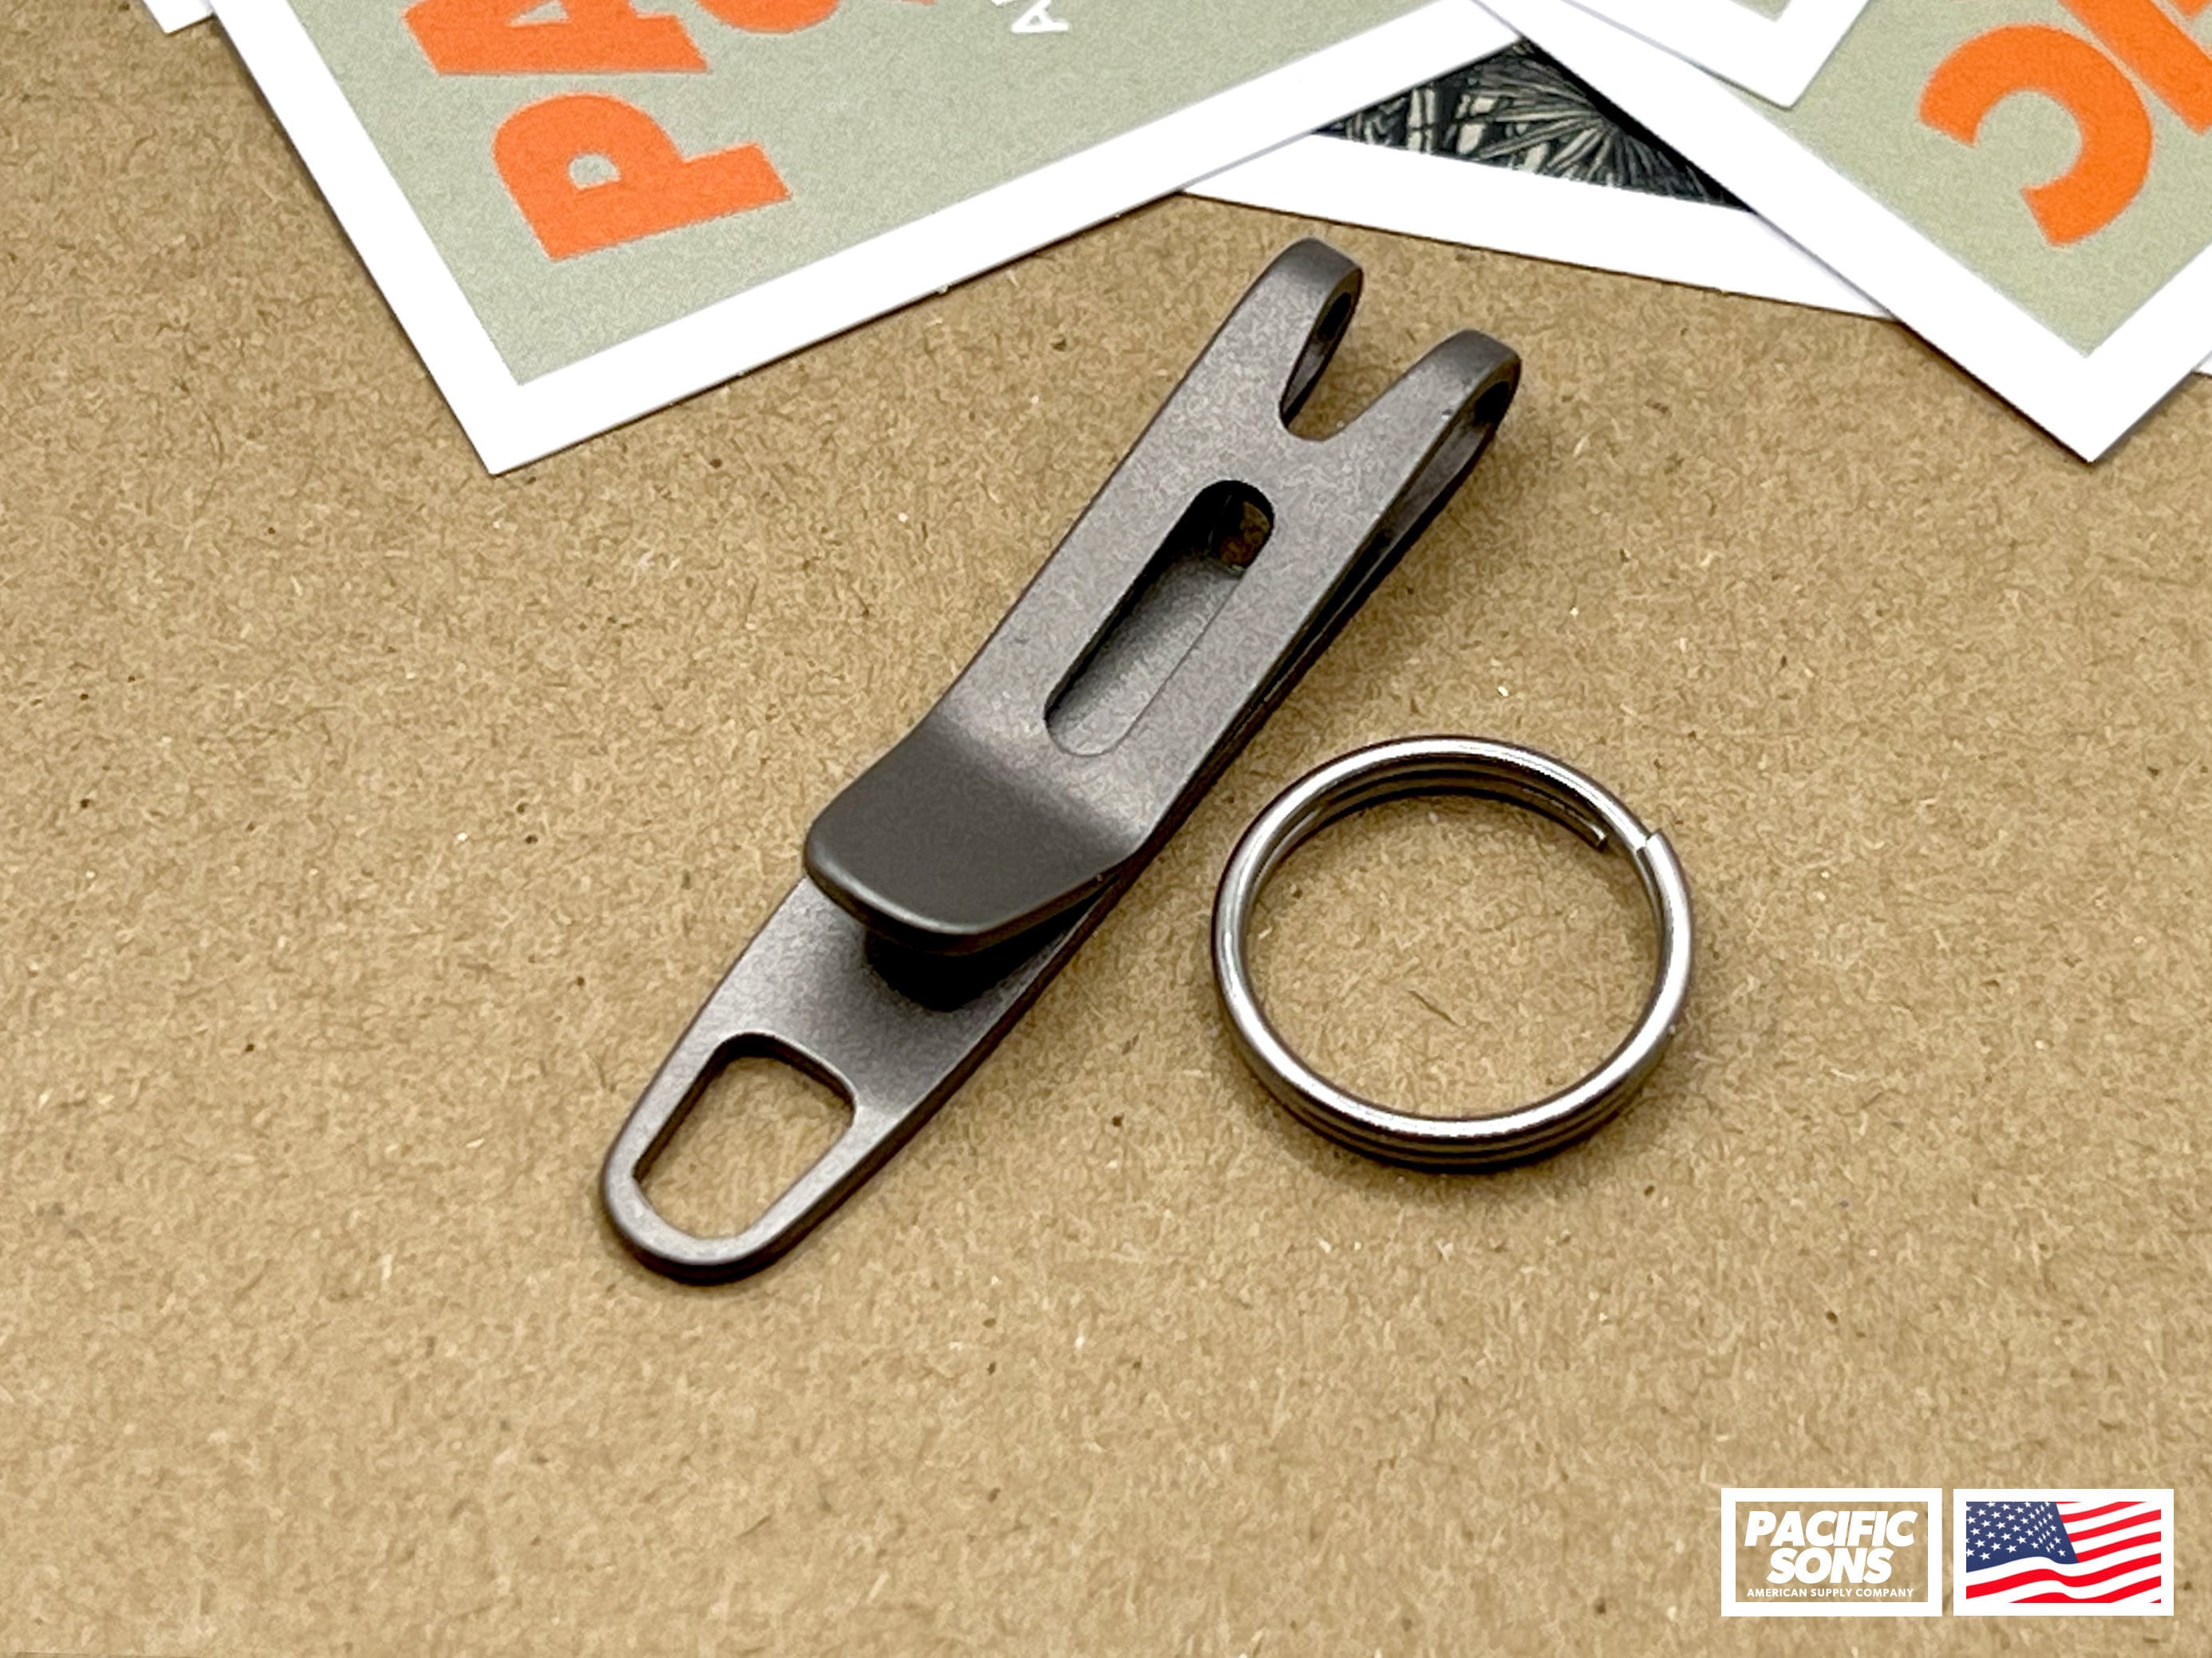  TISUR Belt Loop Keychain Clip, Titanium Carabiner Keychain Key  Holder with Detachable Key Ring for Duty Belt, Car Key chain Gifts for Men  Women, BK1S+D Ring (Black) : Clothing, Shoes 